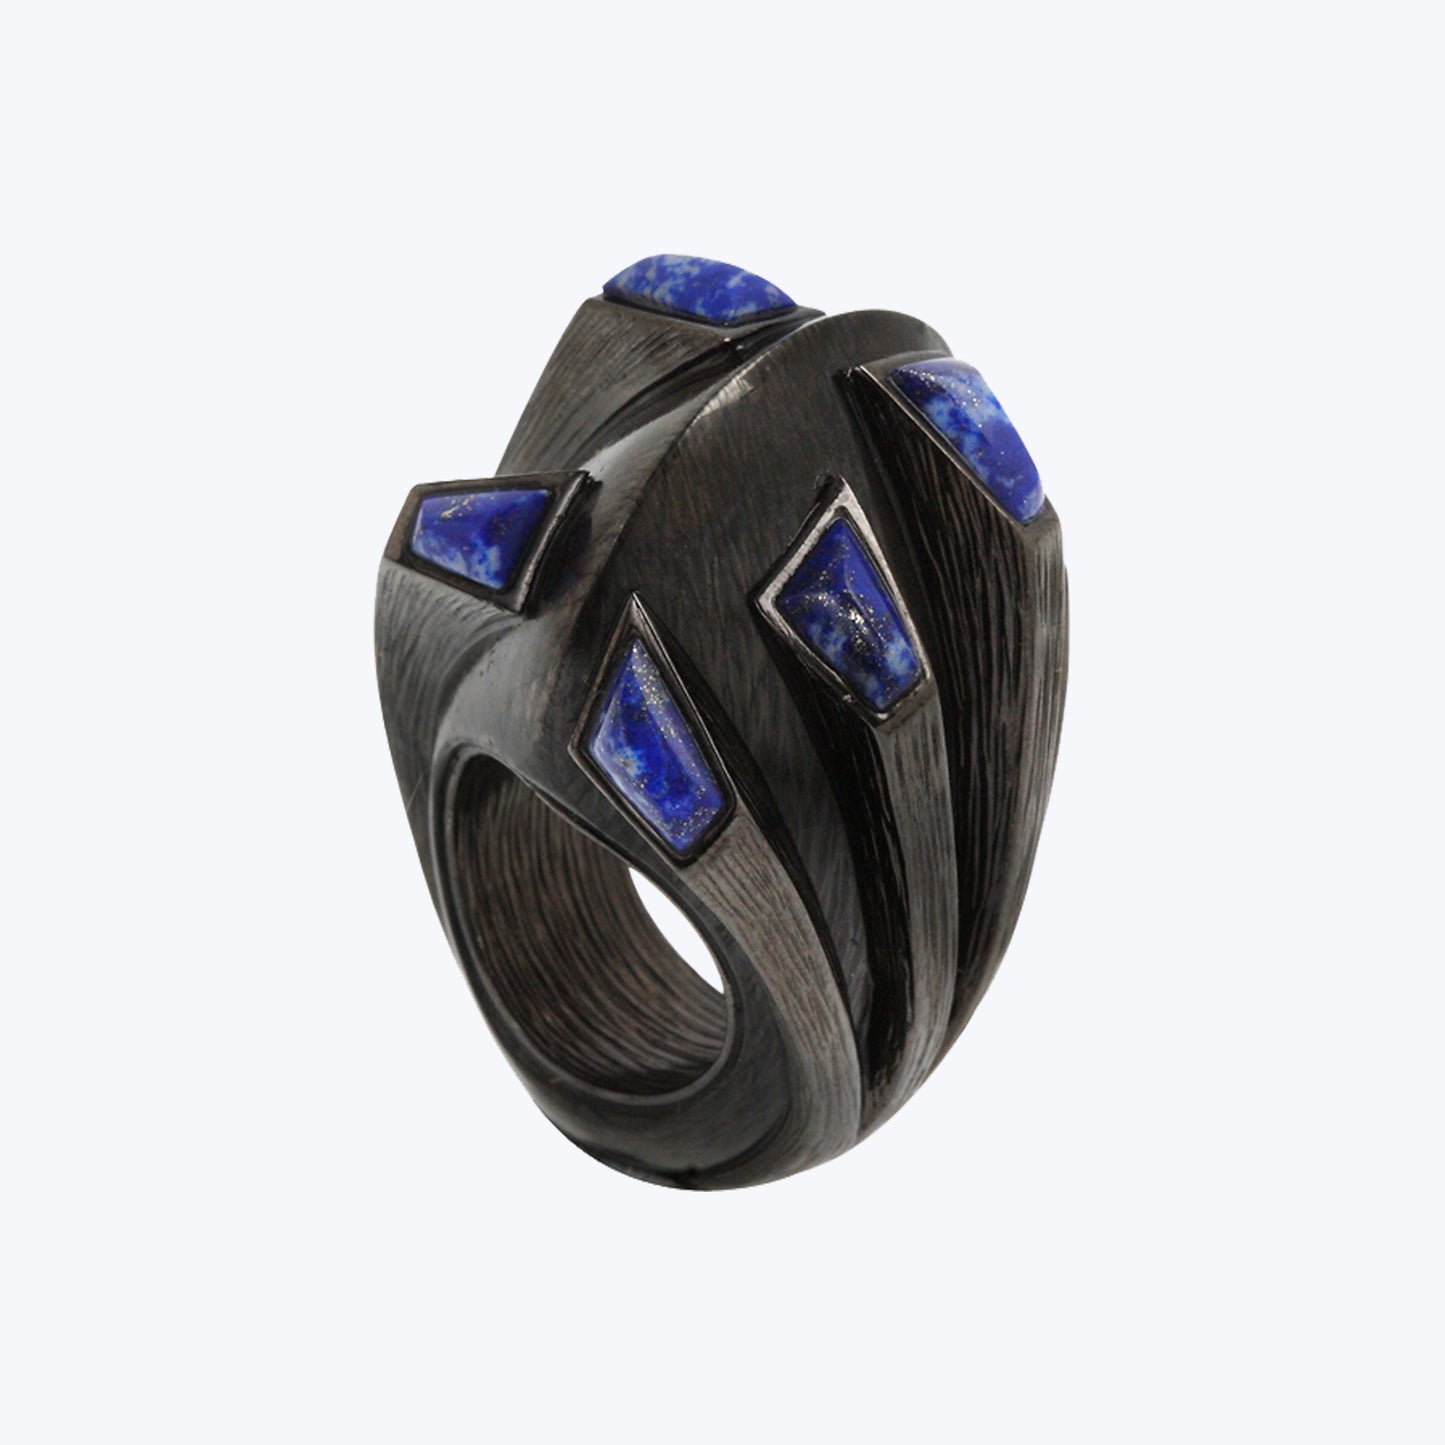 Carbon fiber ring with Lapis Lazuli